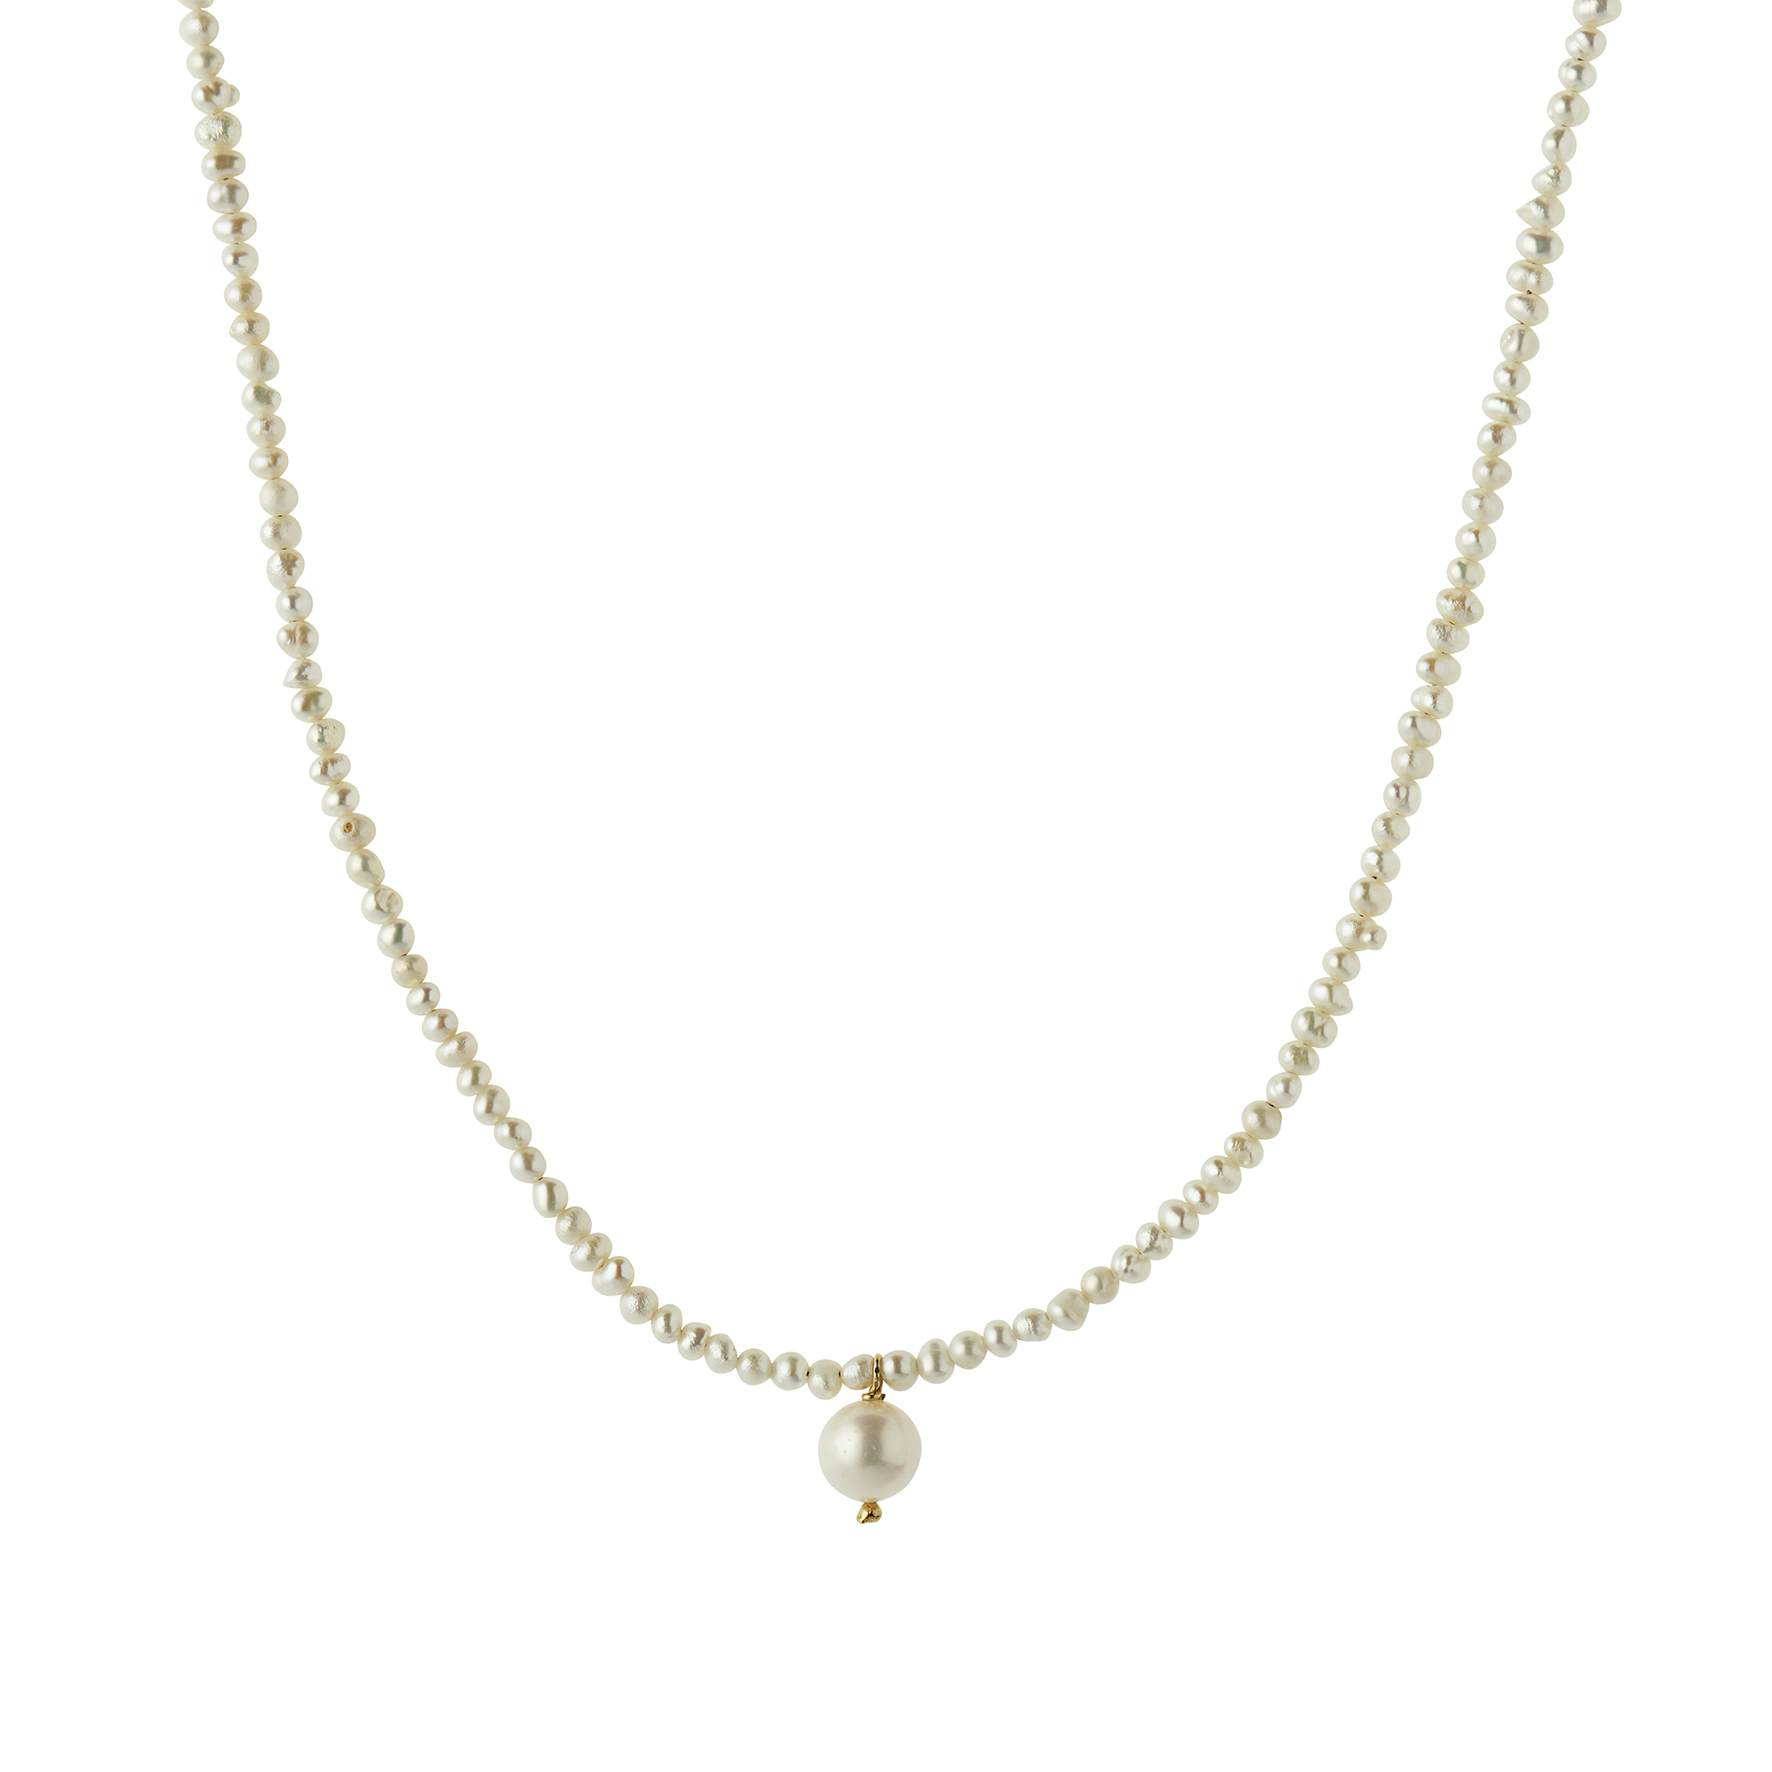 Heavenly Pearl Dream Necklace Classy fra STINE A Jewelry i Forgylt-Sølv Sterling 925